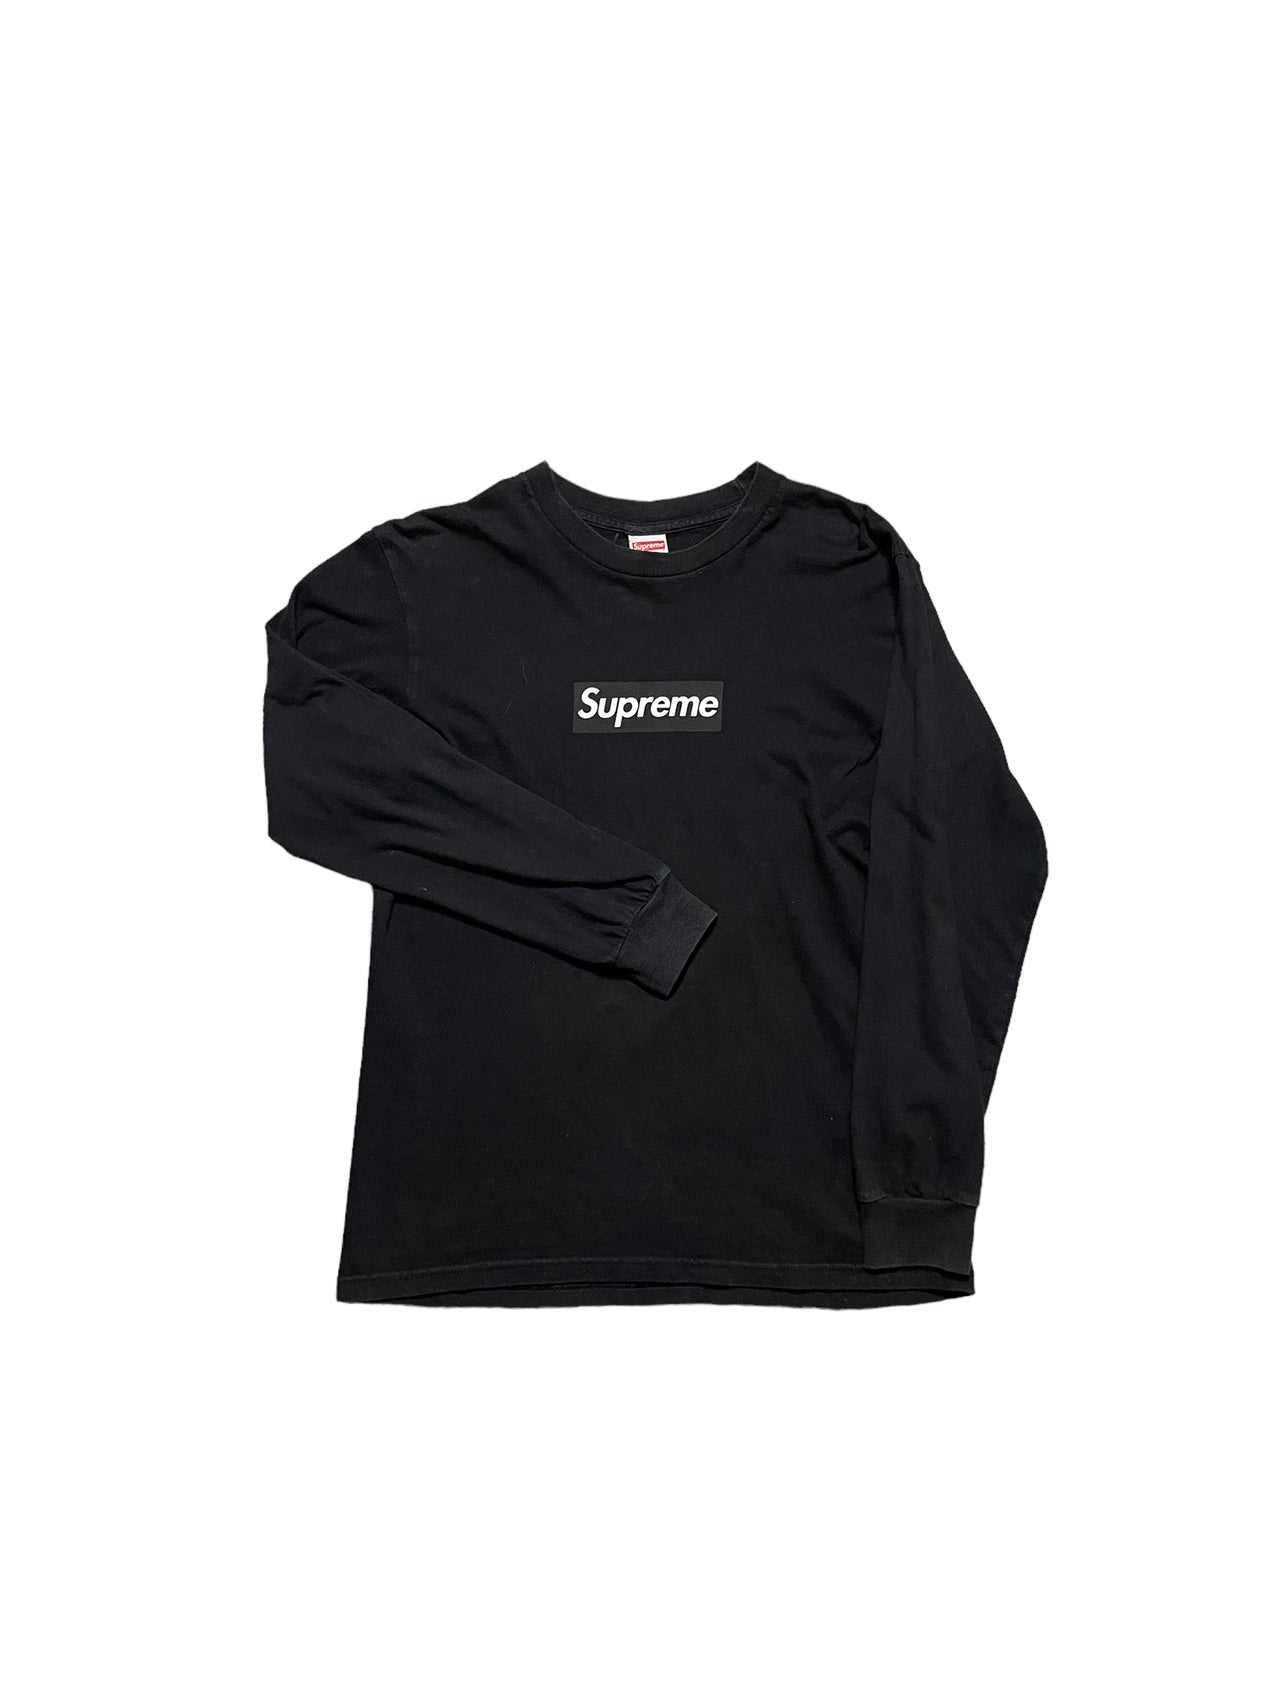 Supreme Box Logo FW|20 Longsleeve T-Shirt